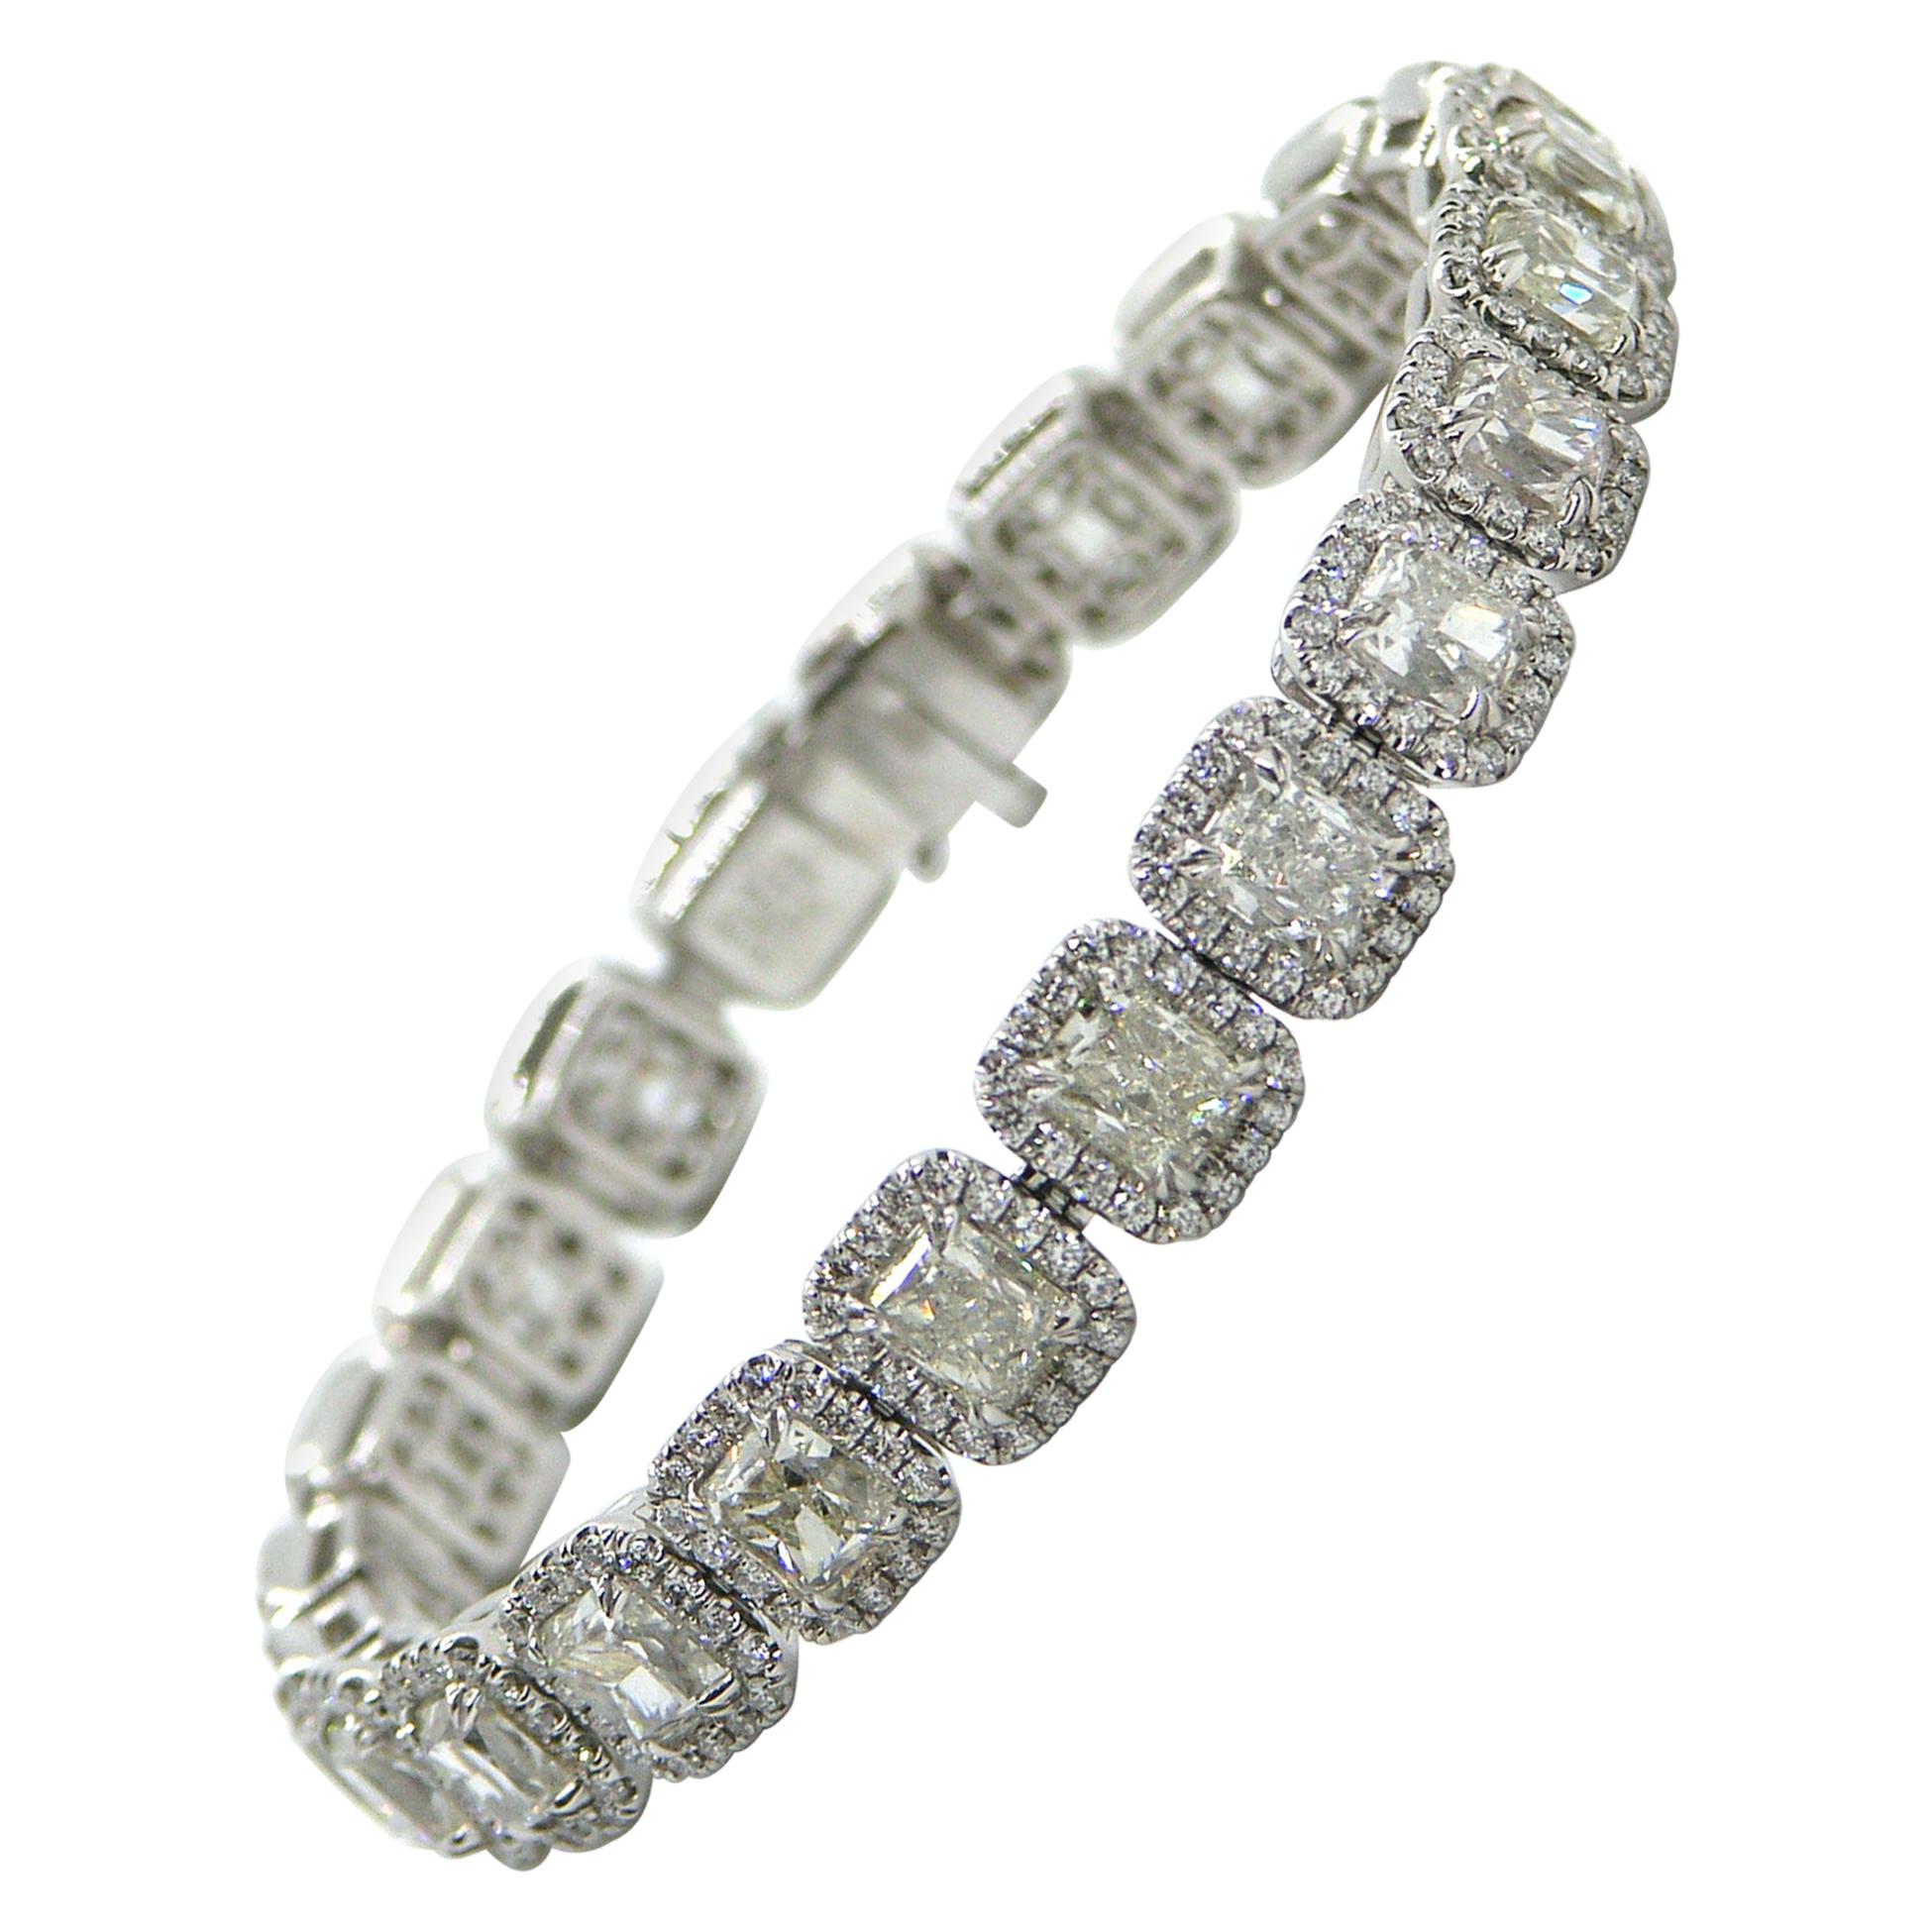 23.10 Carat Radiant Cut Diamond Bracelet - 18K White Gold